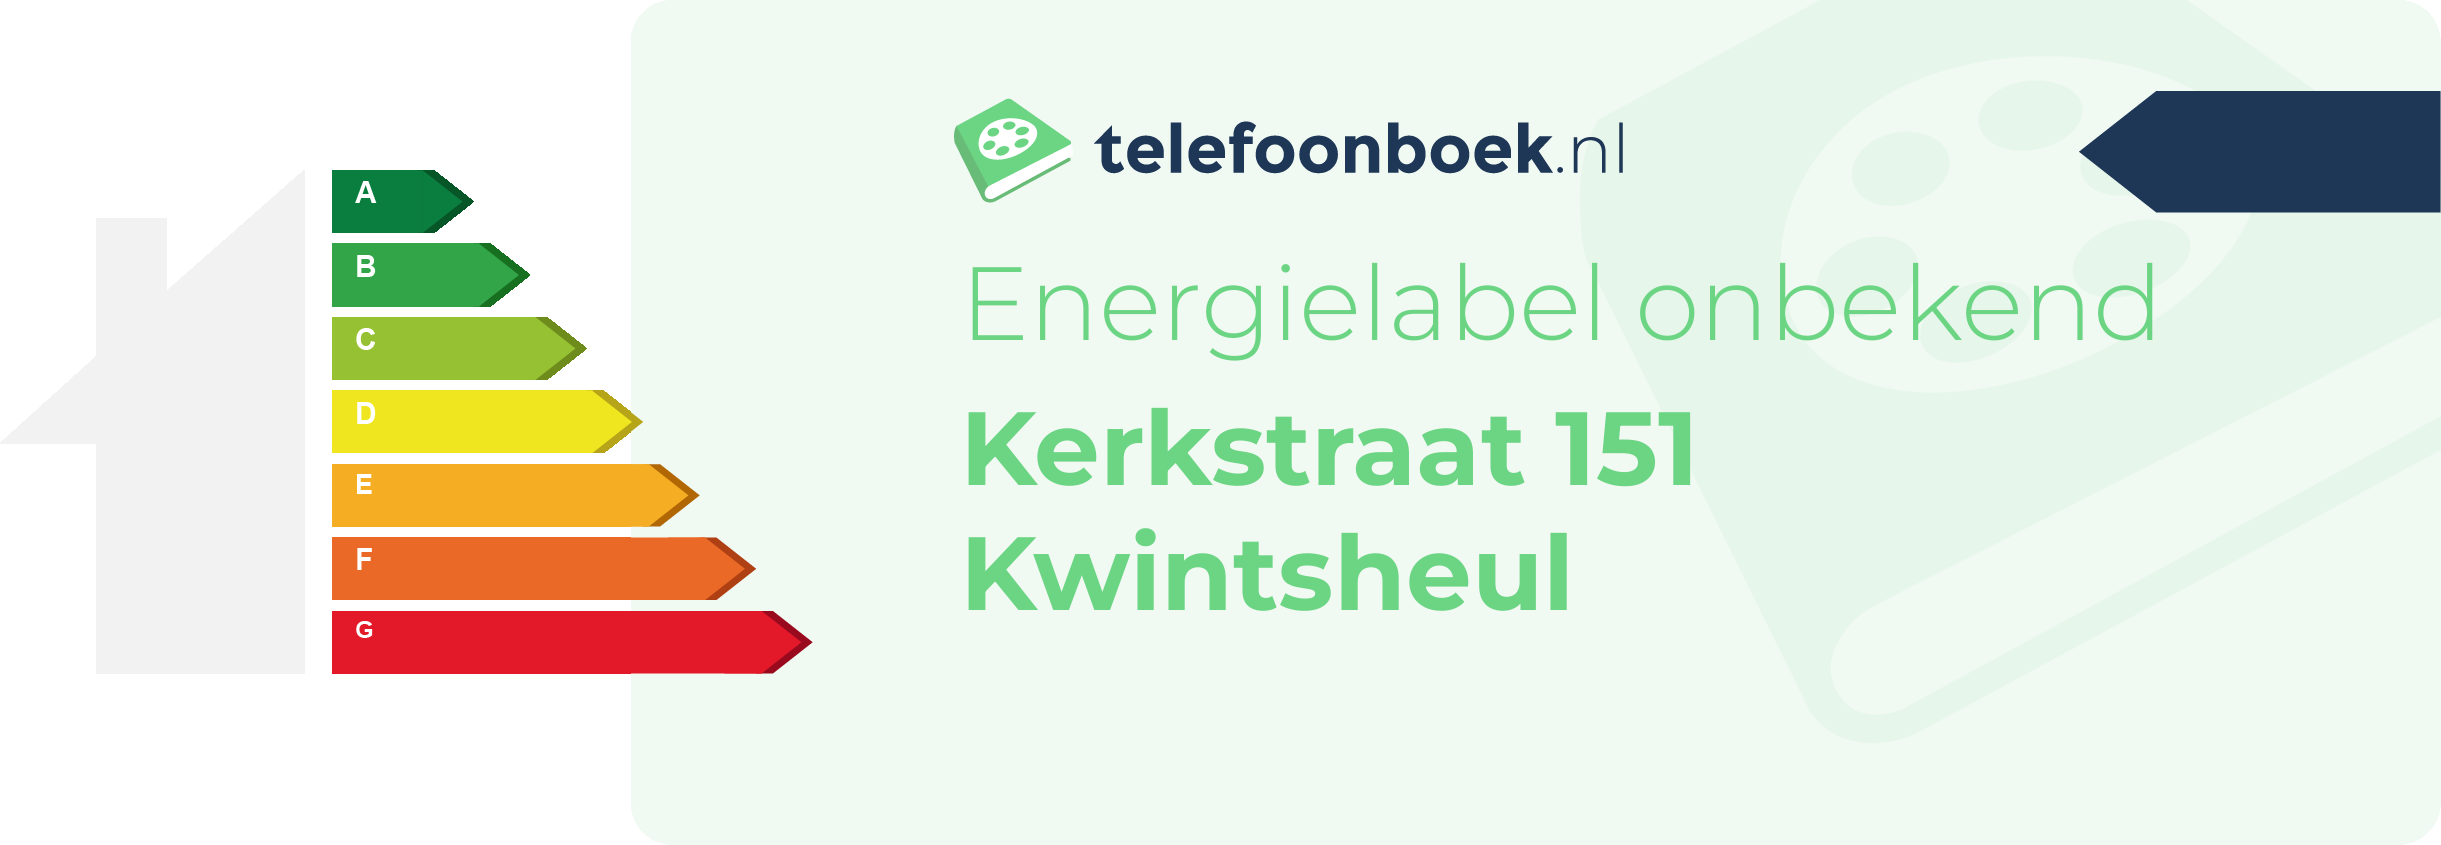 Energielabel Kerkstraat 151 Kwintsheul